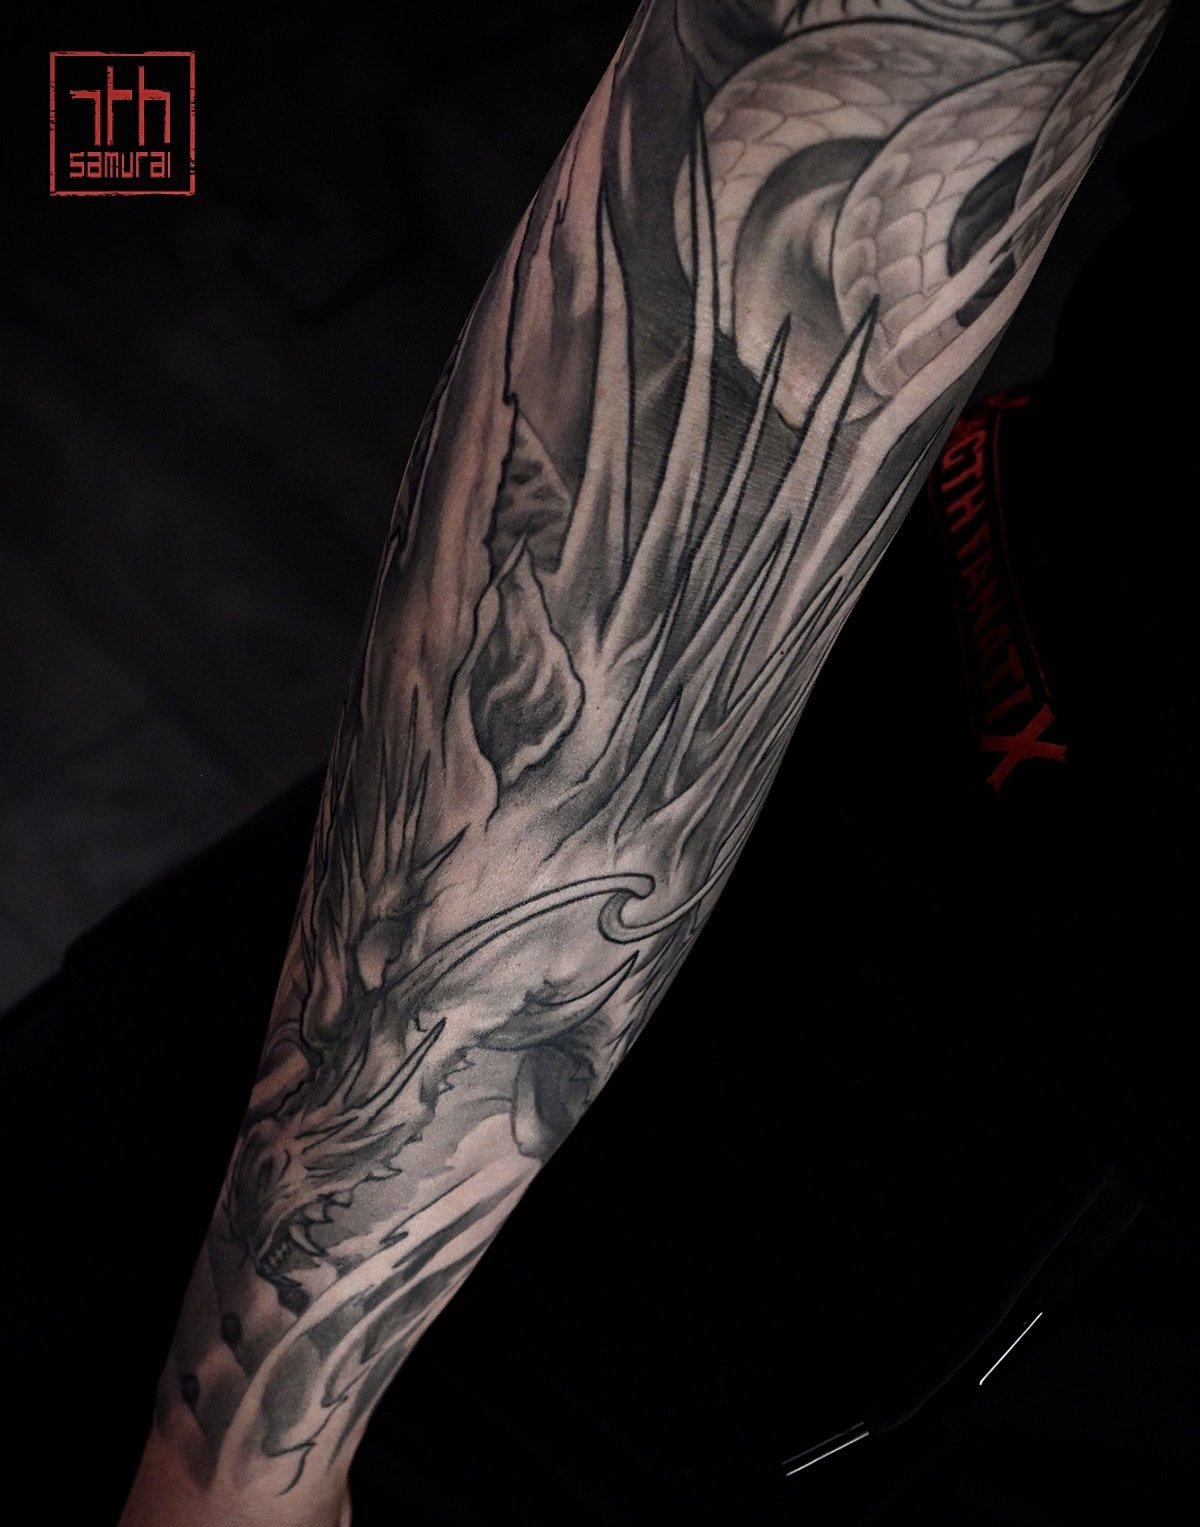 Asian zodiacs year of dragon Men's neo japanese asian astrology arm sleeve tattoo  asian artist: Kai 7th Samurai. YEG Edmonton, Alberta, Canada 2023 best 2024 